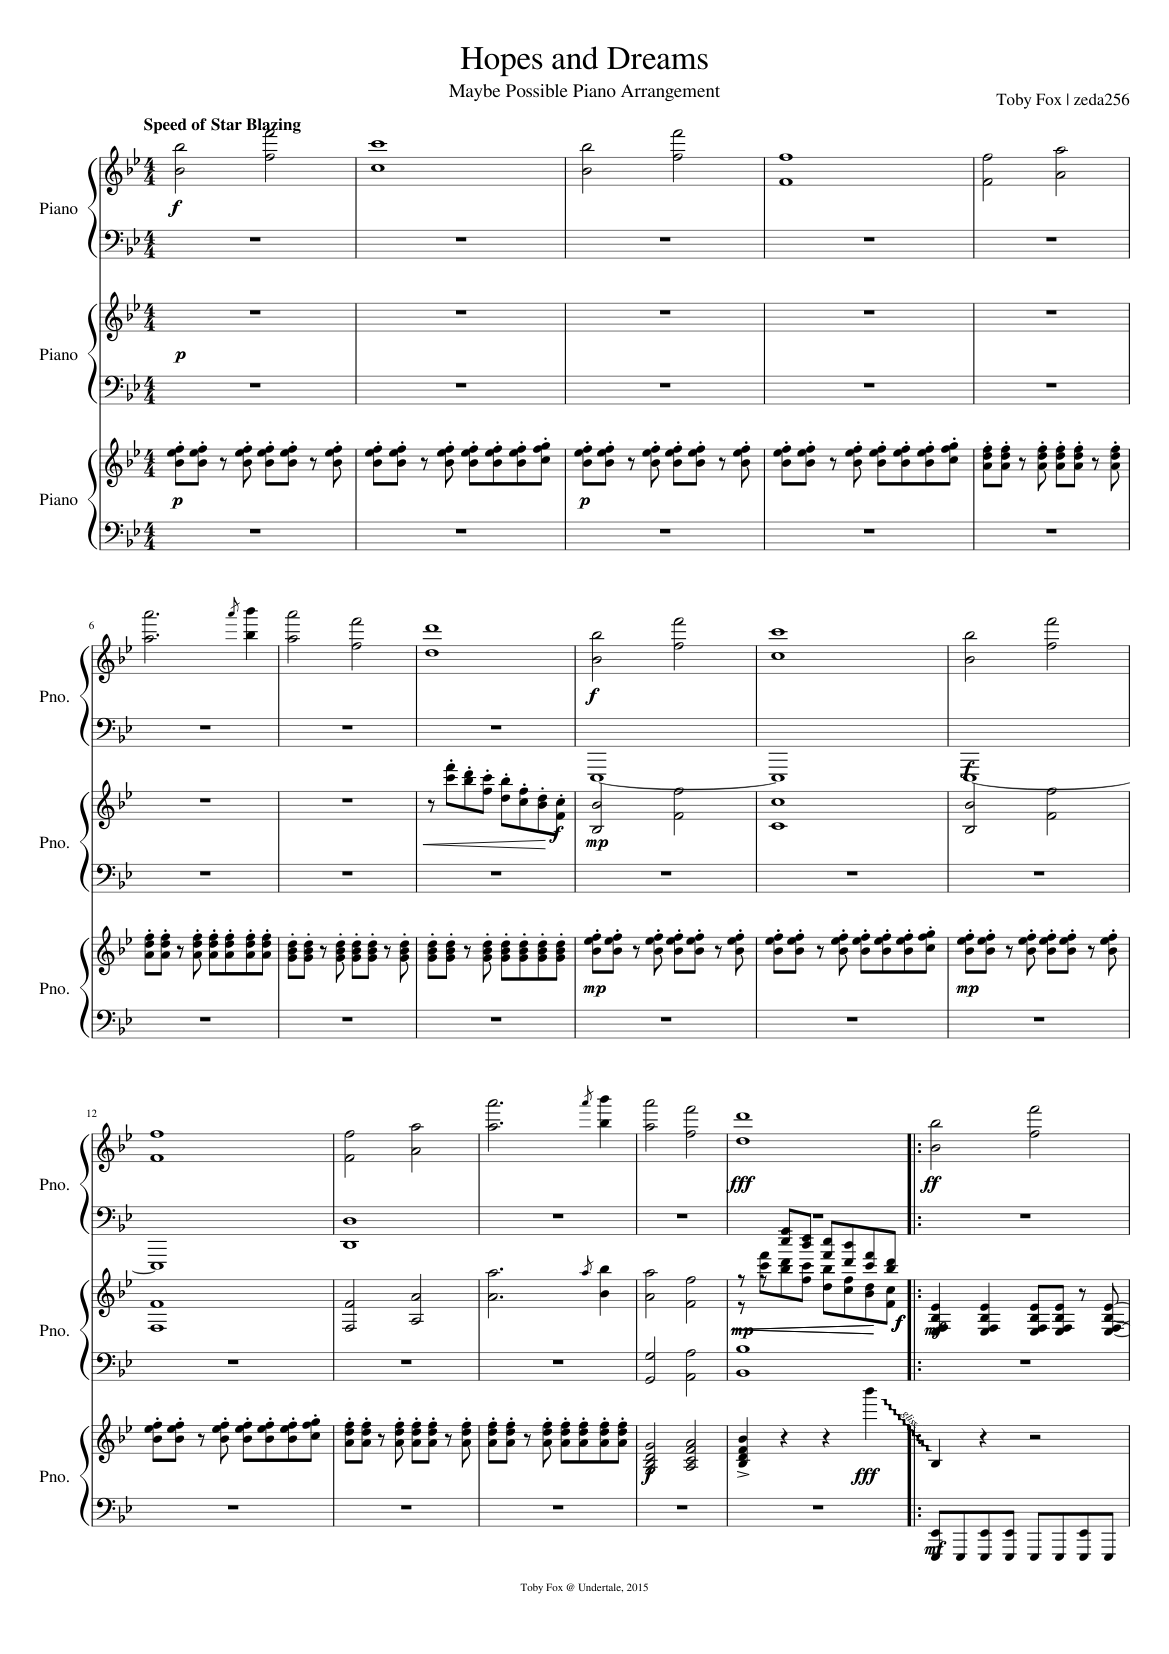 Undertale - Hopes Dreams Arrangement] Sheet for Piano (Mixed Trio) | Musescore.com